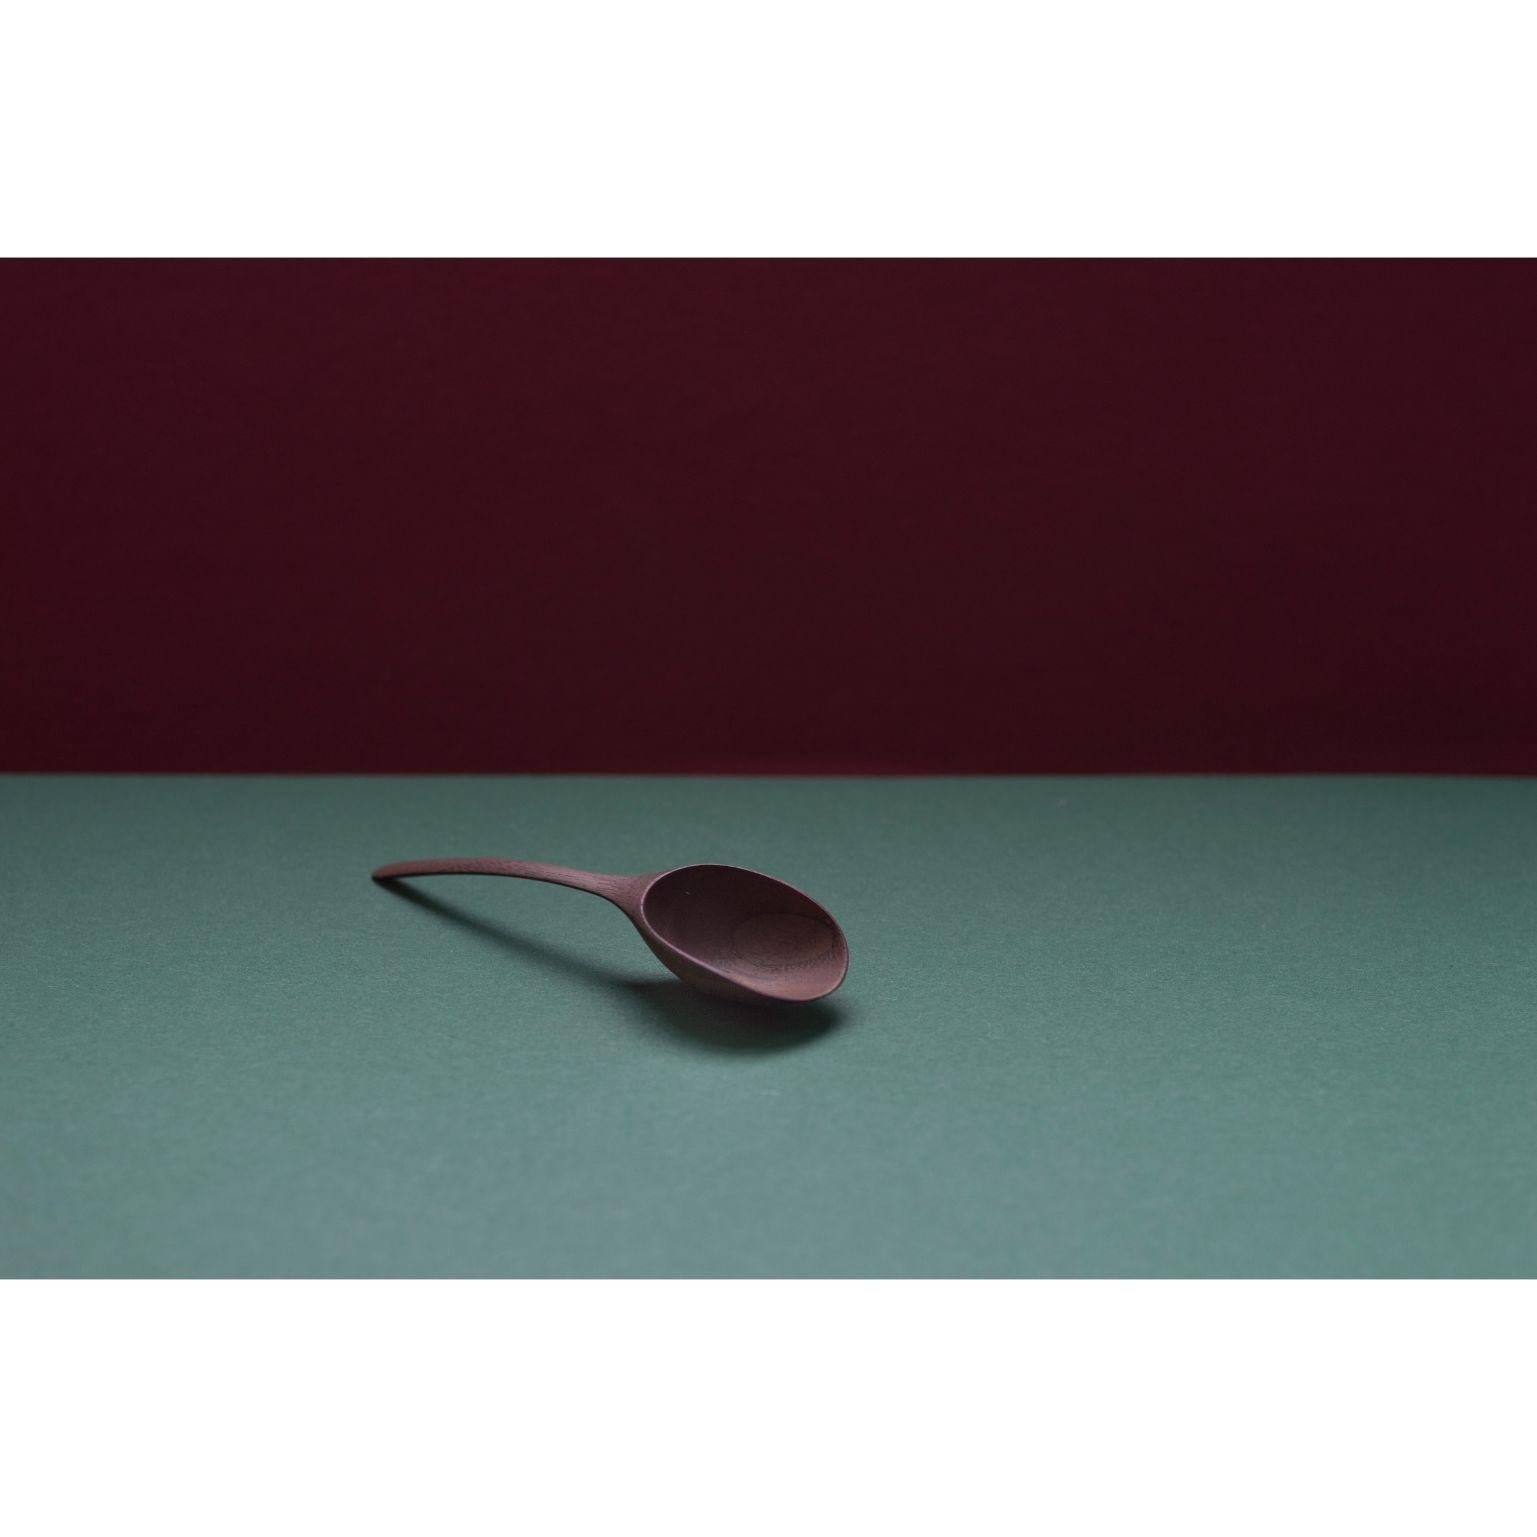 Modern Kupu Spoon by Antrei Hartikainen